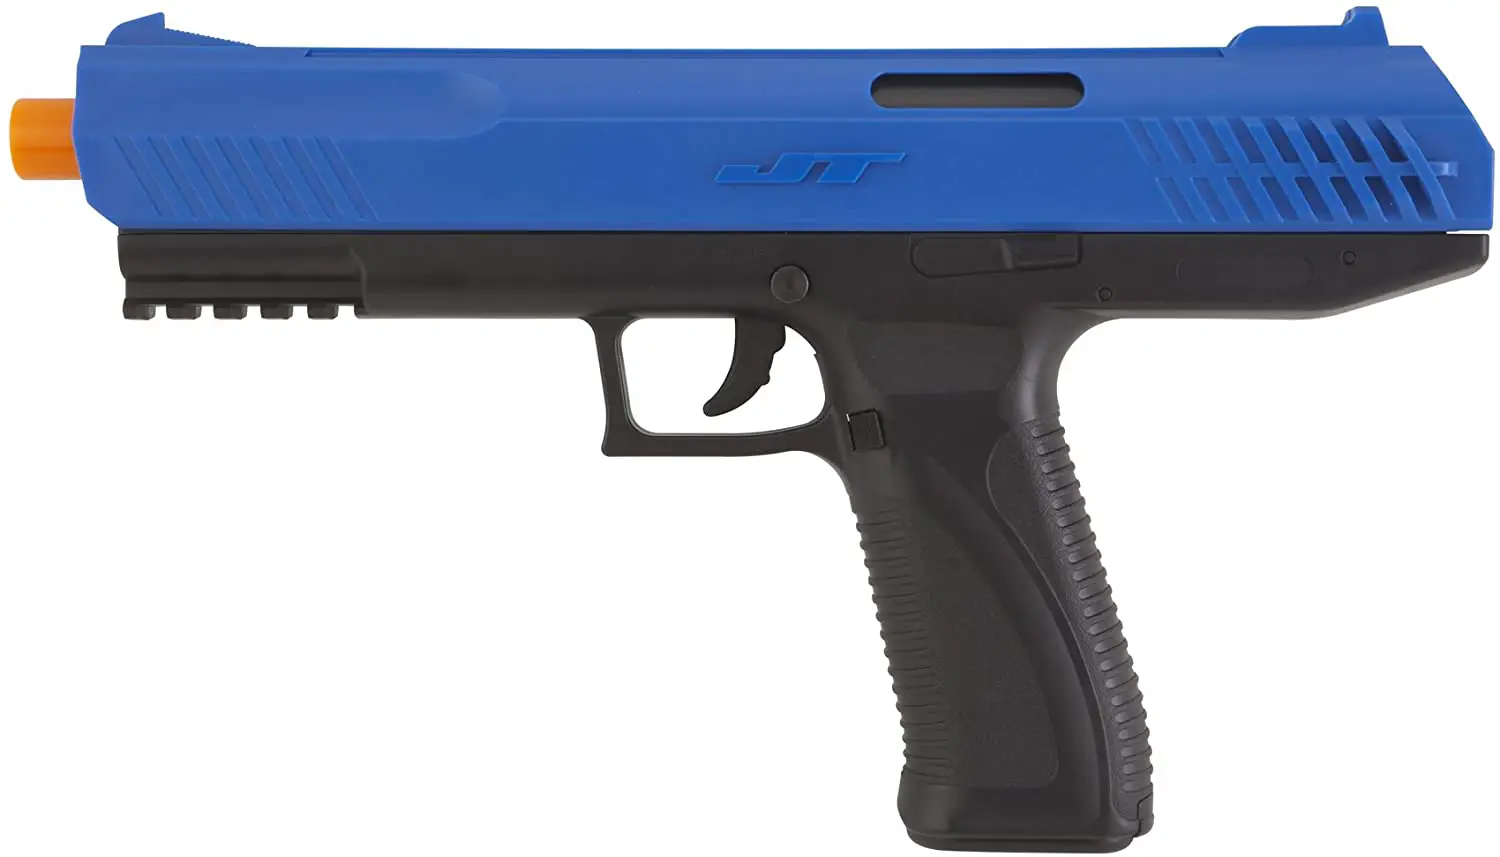 jt splatmaster z100 paintball pistol blue and black color